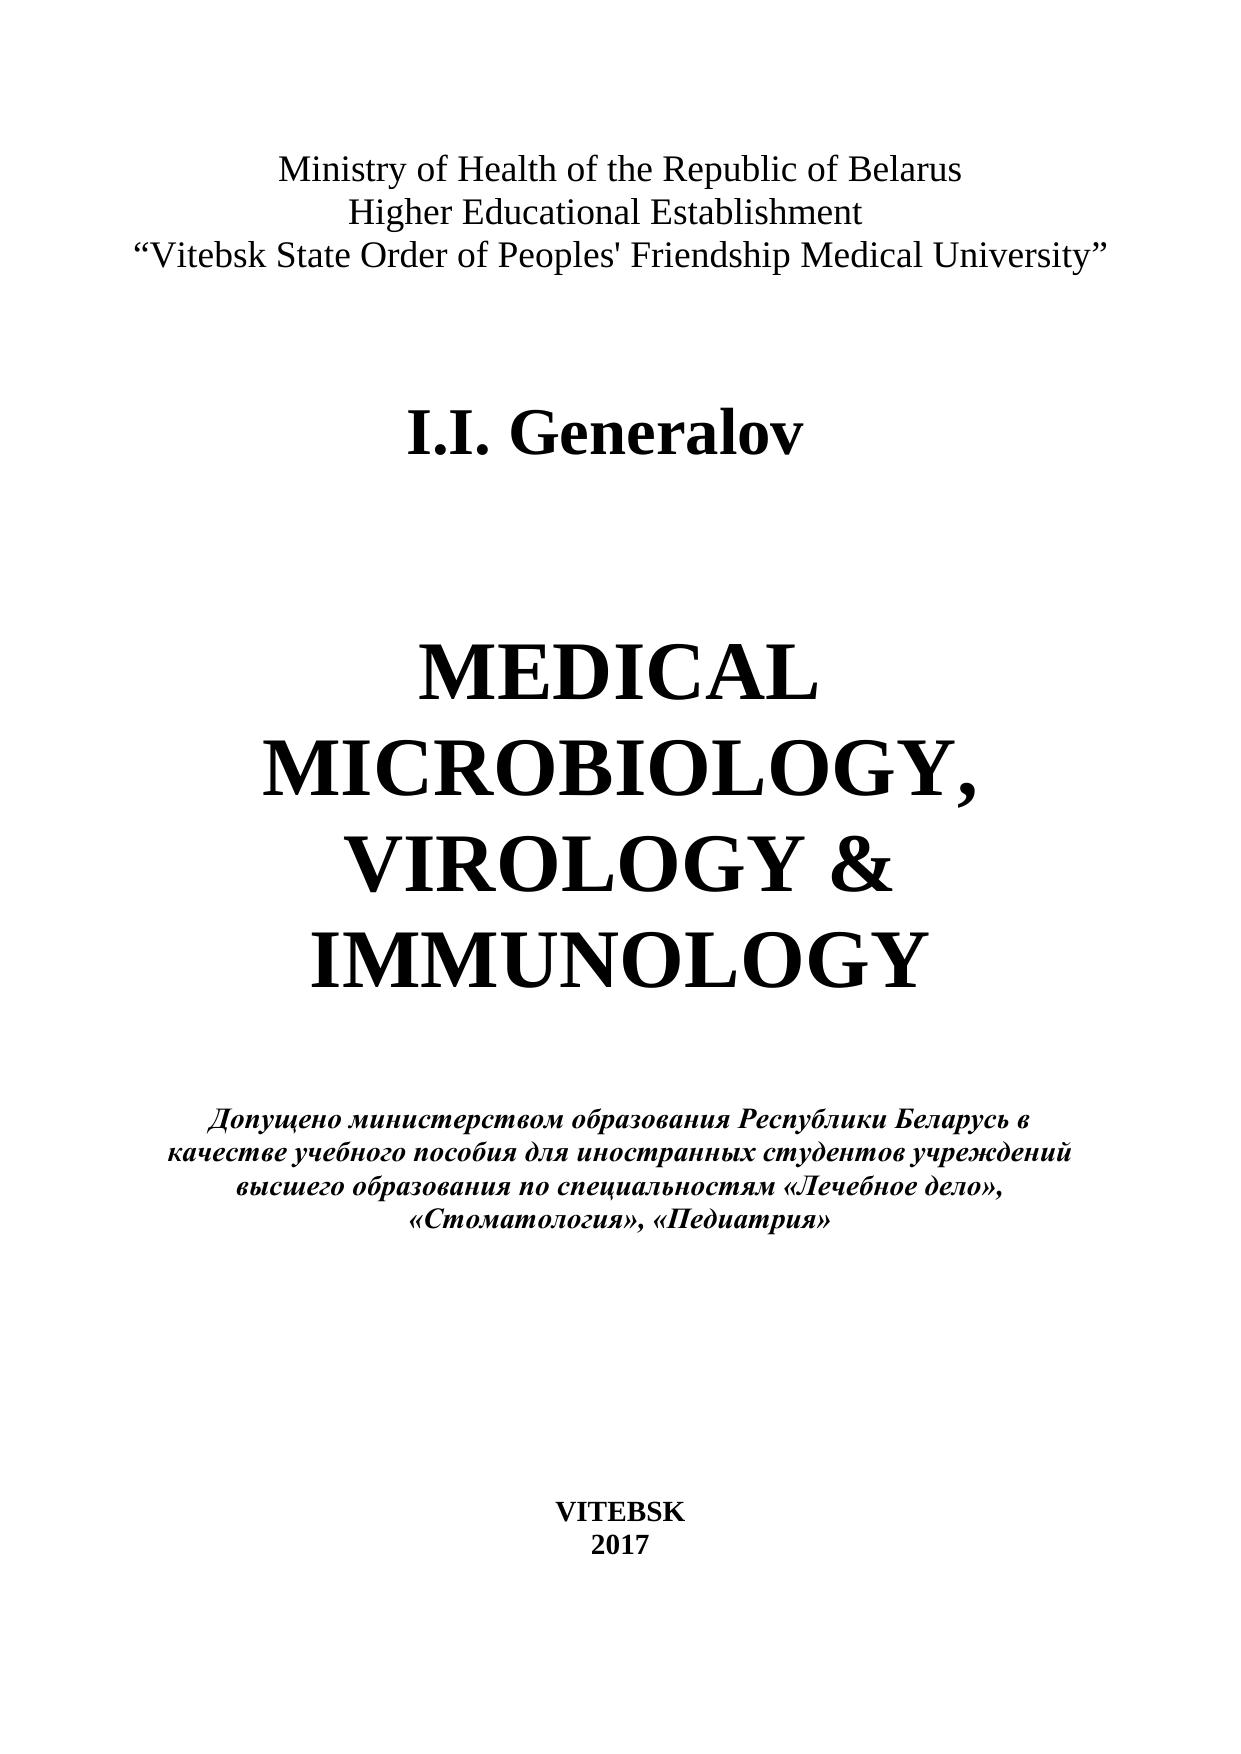 Medical Microbiology, Virology & Immunology